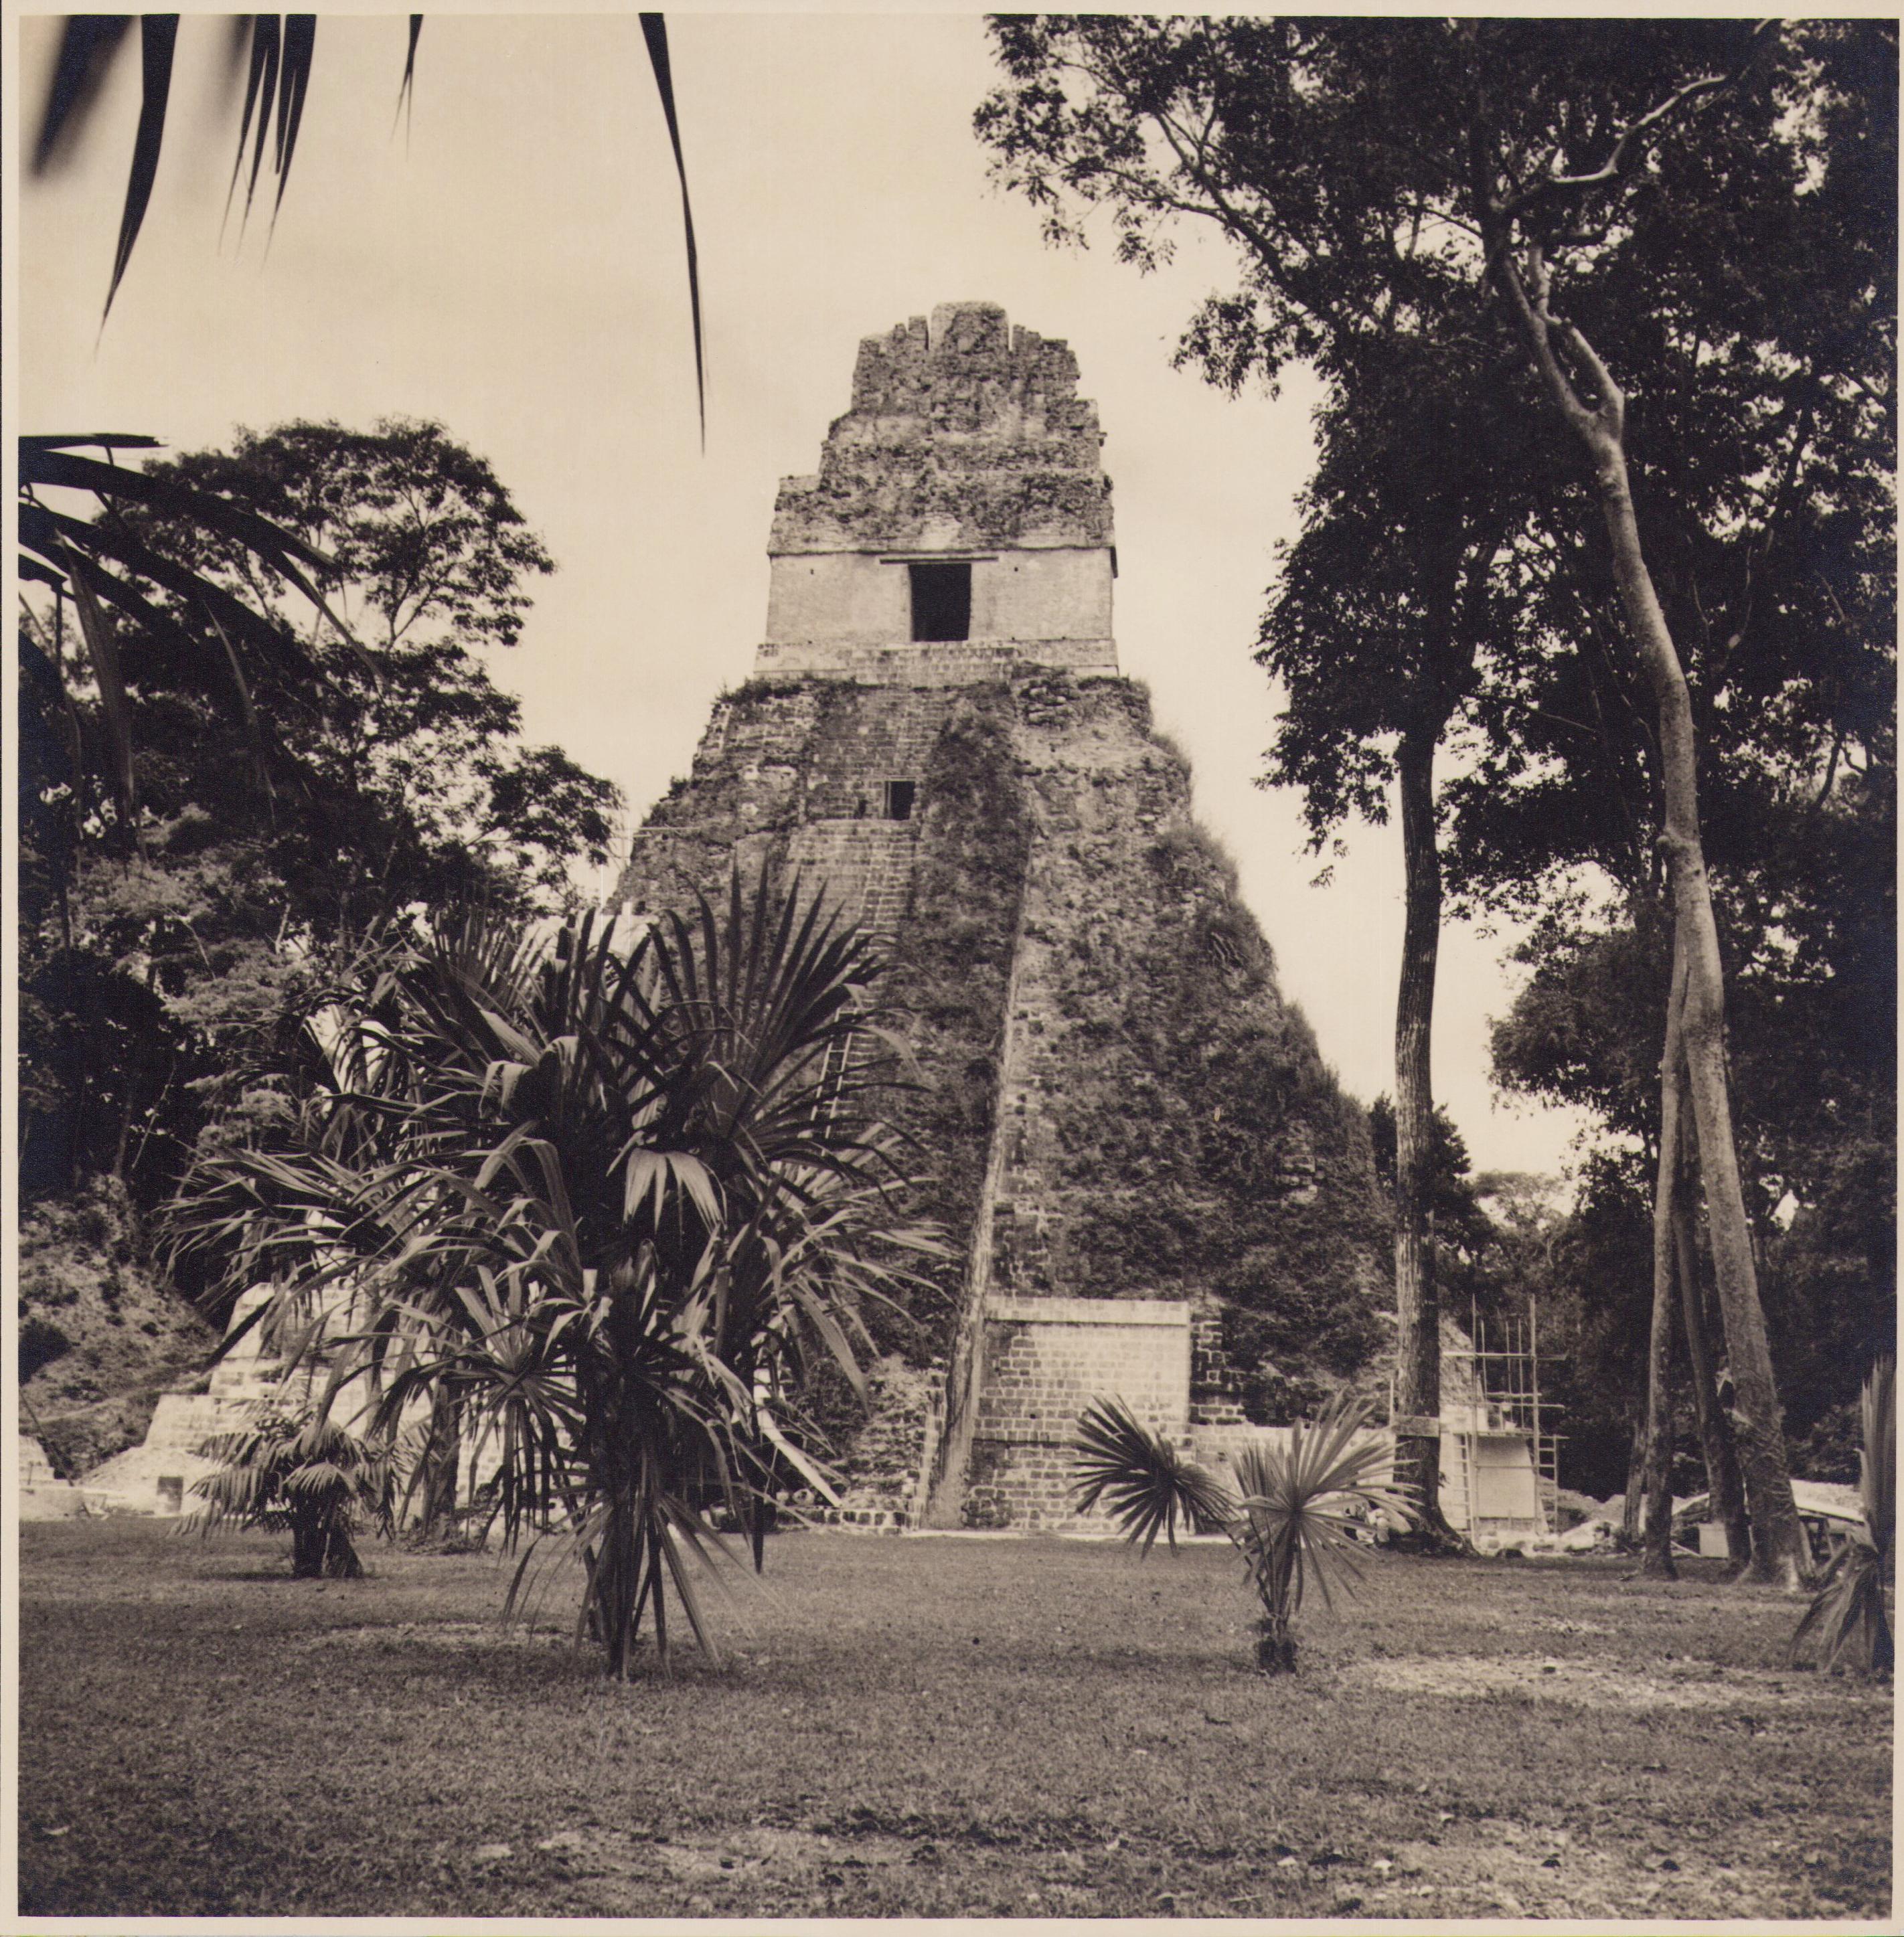 Hanna Seidel Portrait Photograph - Guatemala, Tikal, Black and White Protography, ca. 1960s, 24, 4 x 24, 1 cm